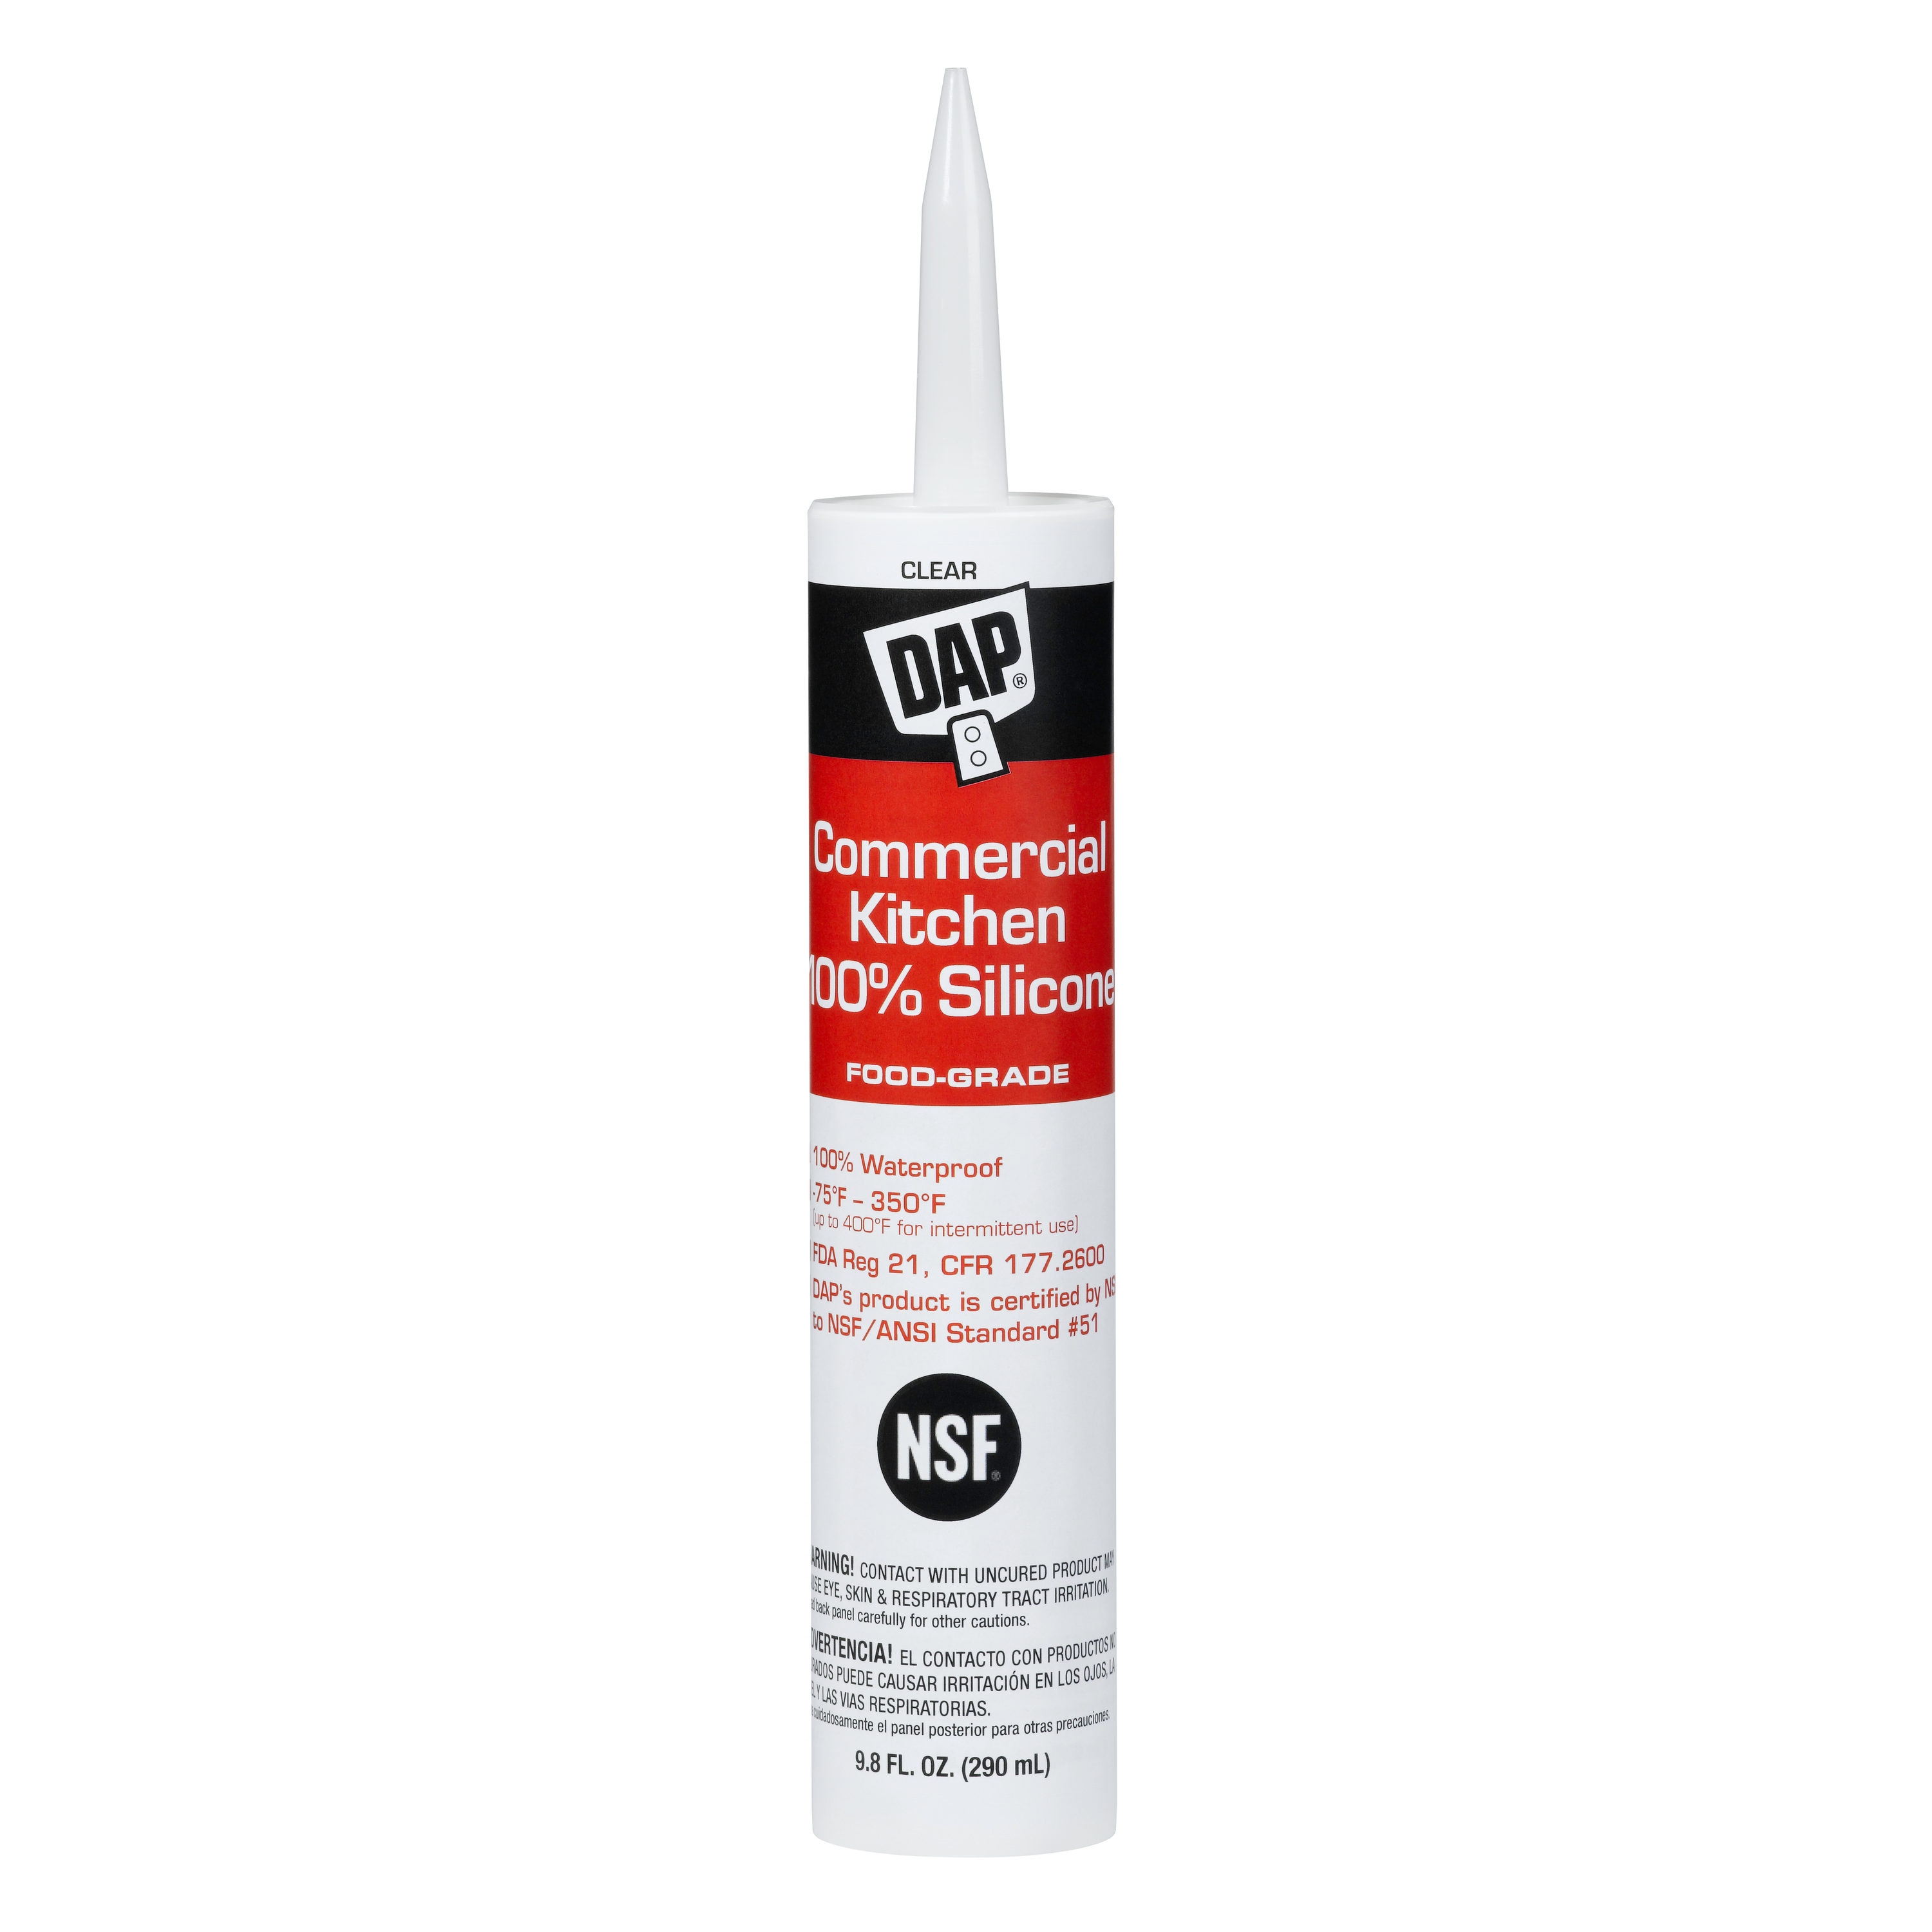 DAP 2.8 Oz. All-Purpose 100% Silicone Adhesive Sealant, Clear